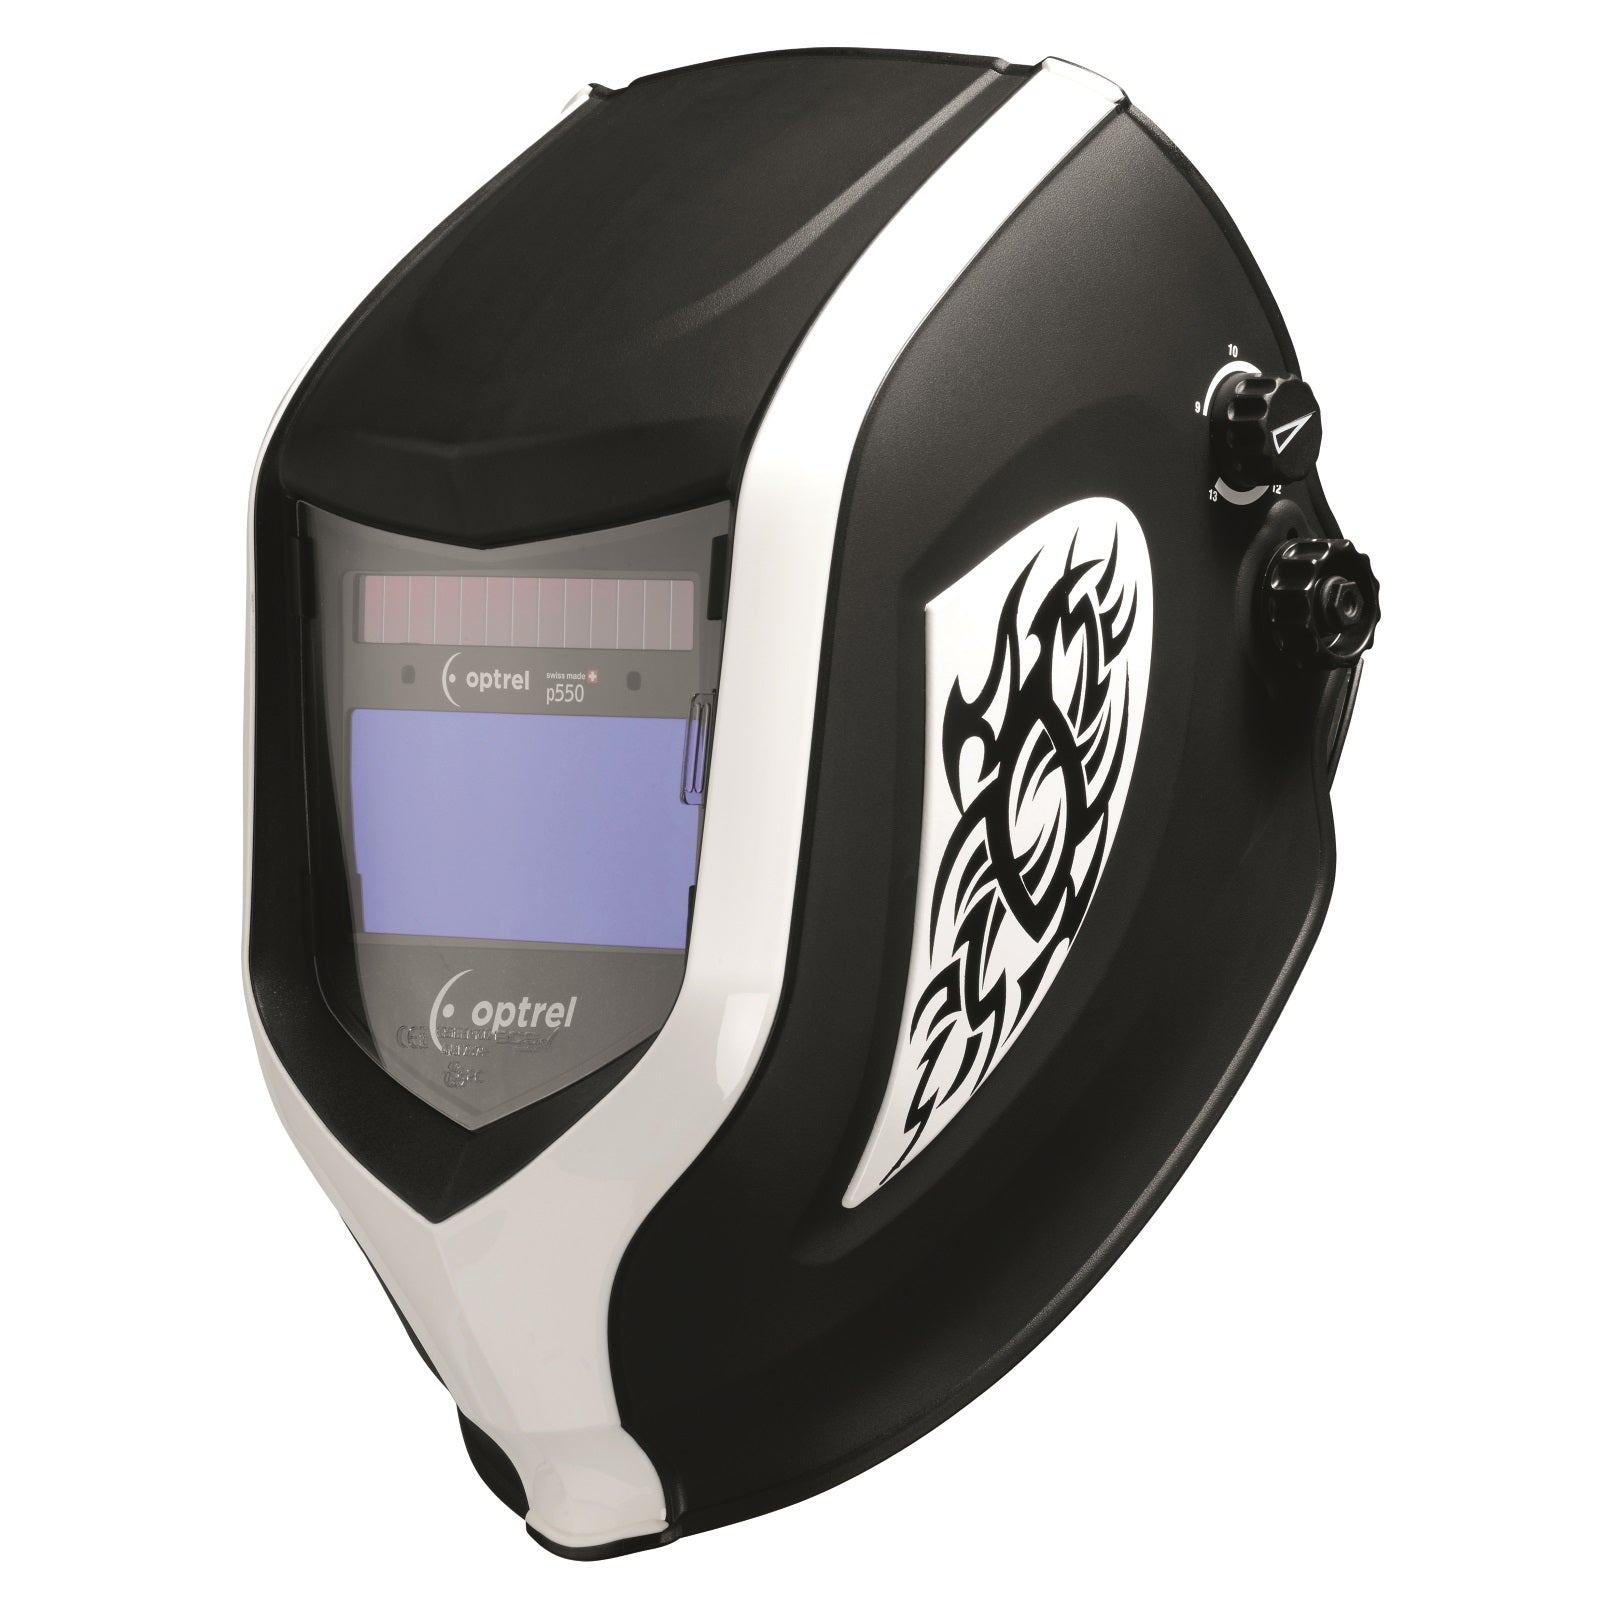 Optrel p550 Series White/Black Helmet (1007.030)